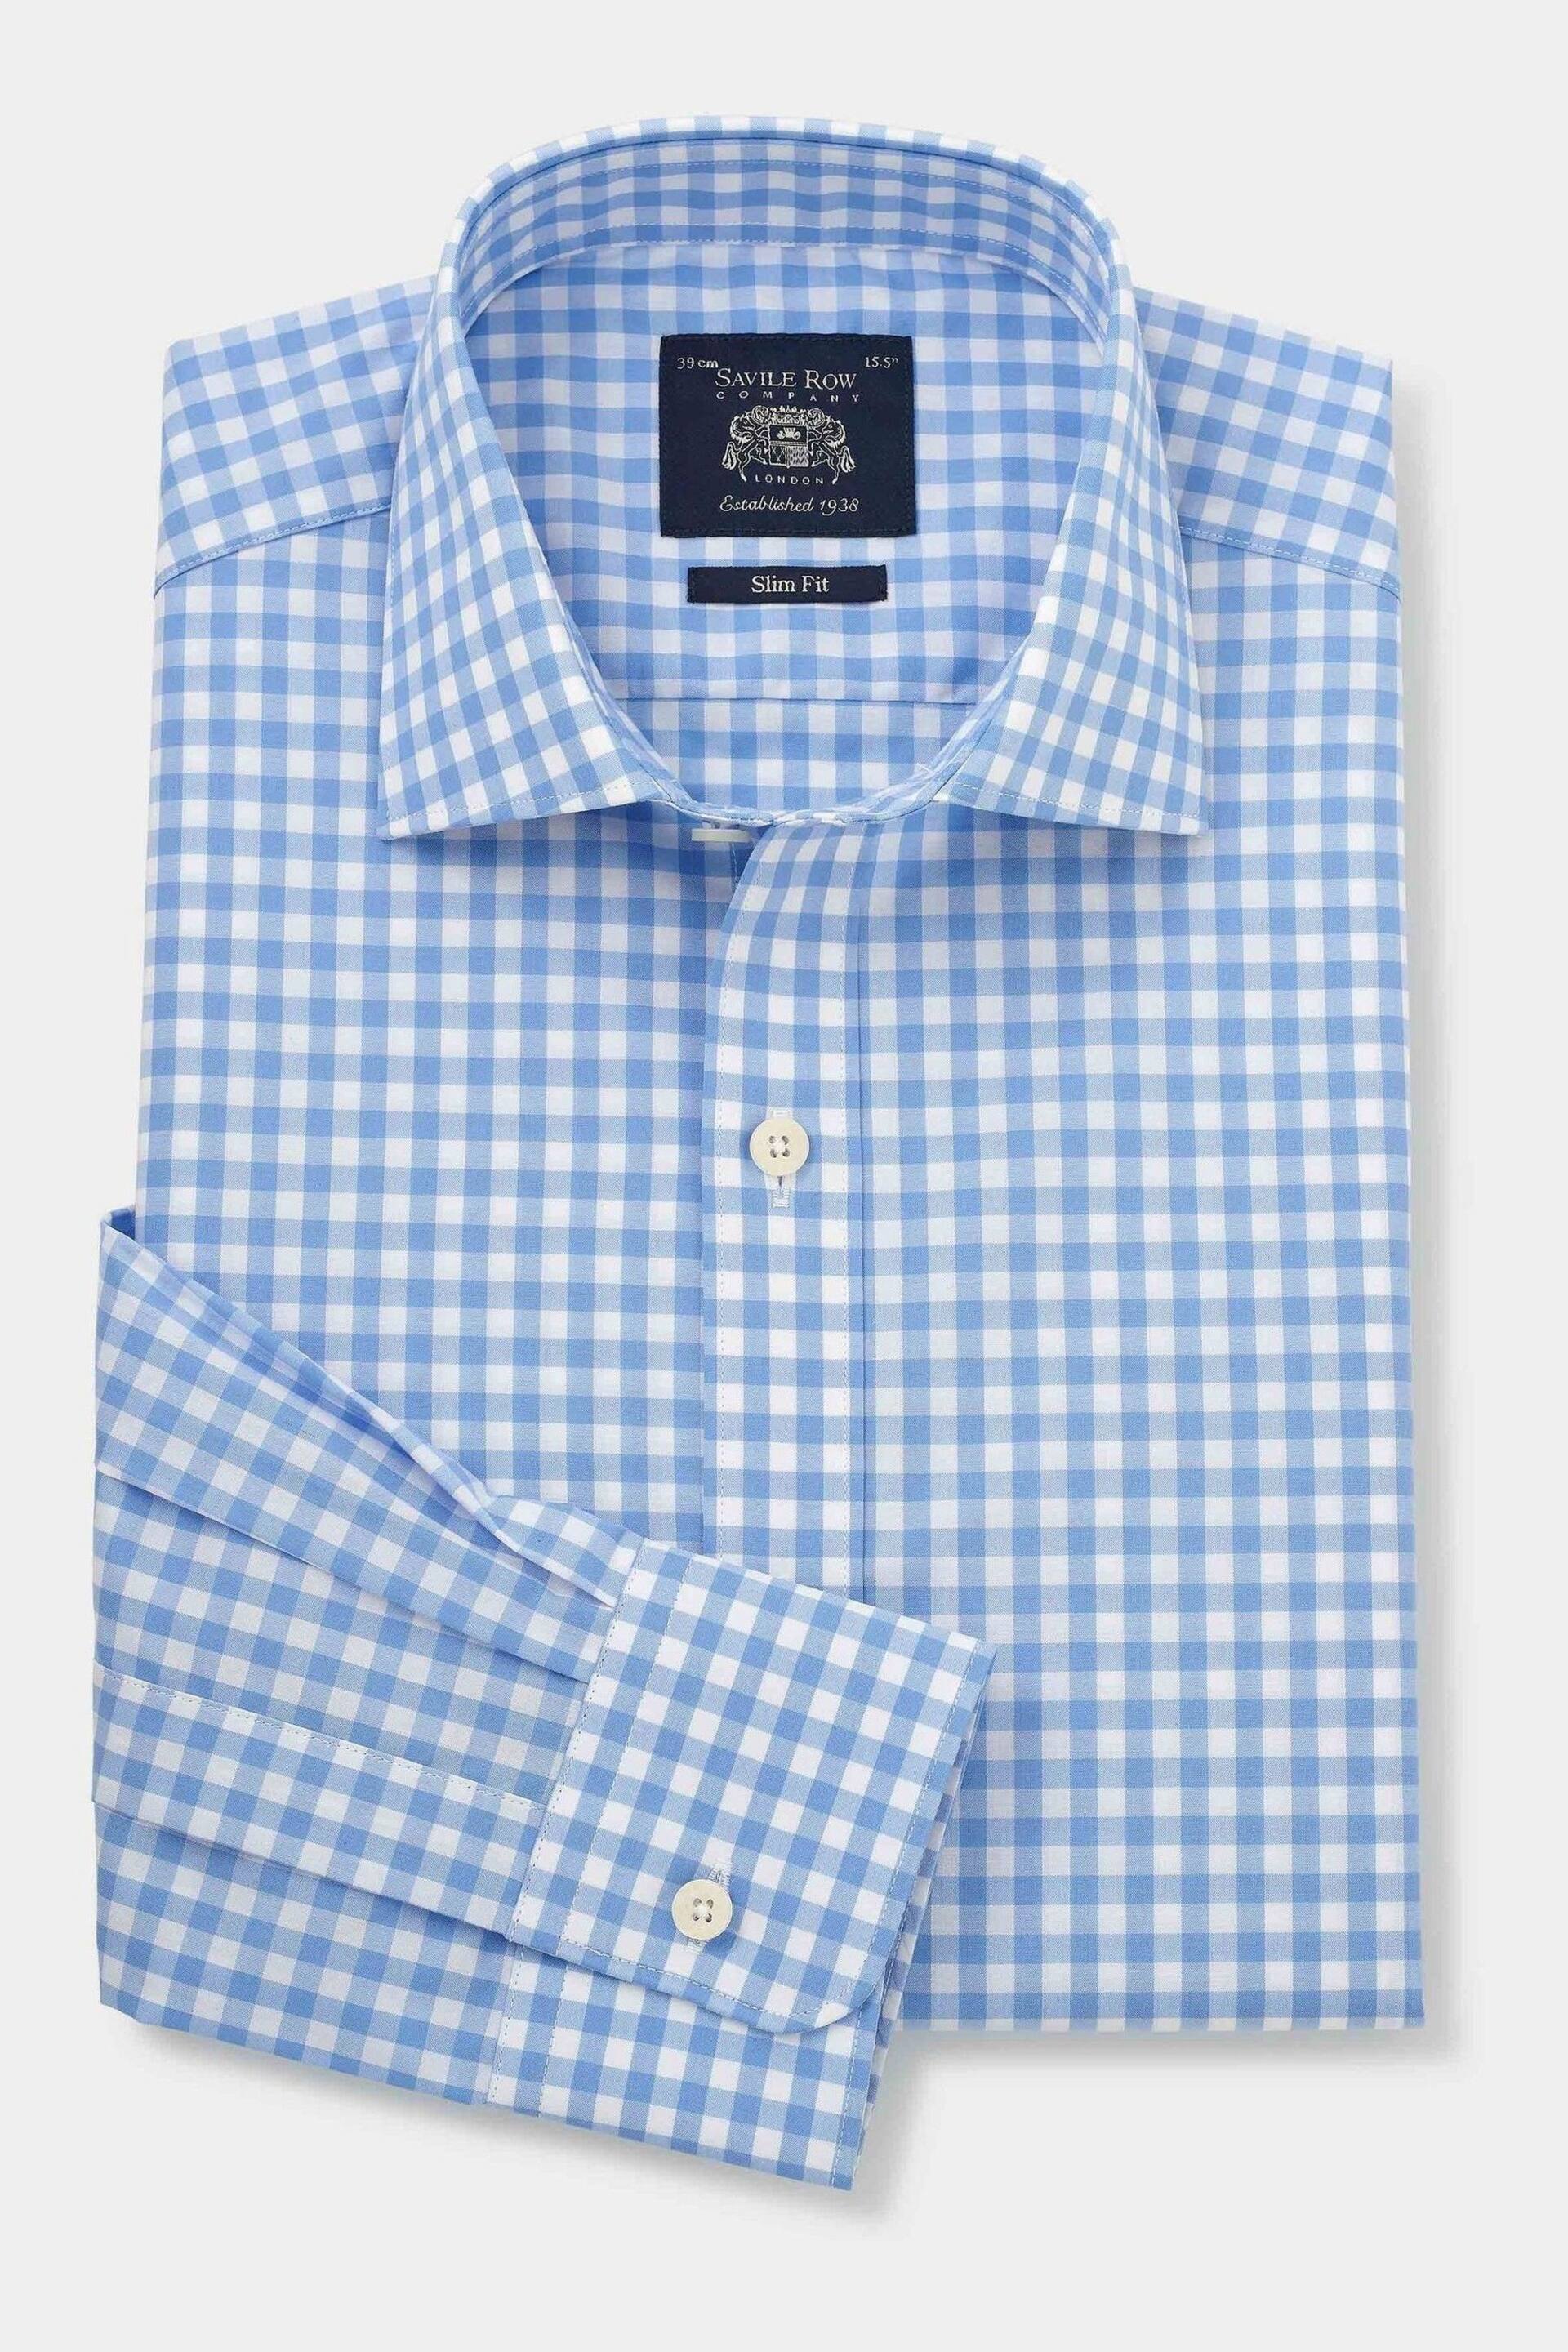 The Savile Row Company Slim Fit Blue Single Cuff Savile Row Check Shirt - Image 4 of 6